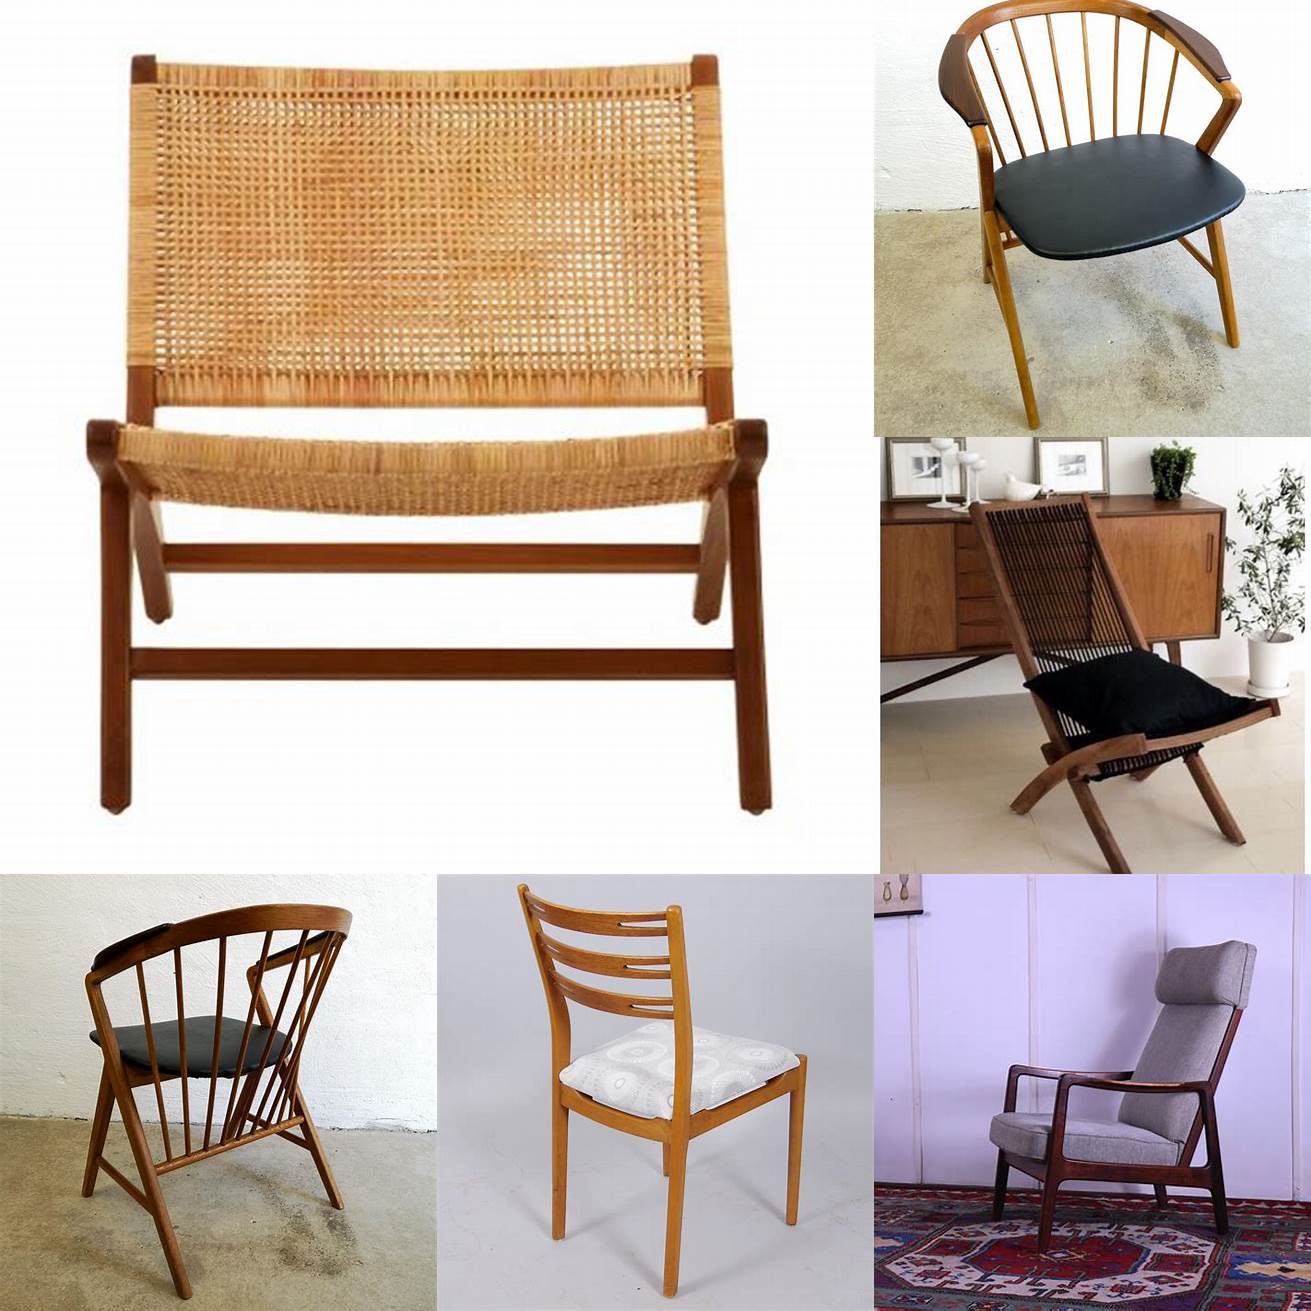 Ikea Teak Chairs